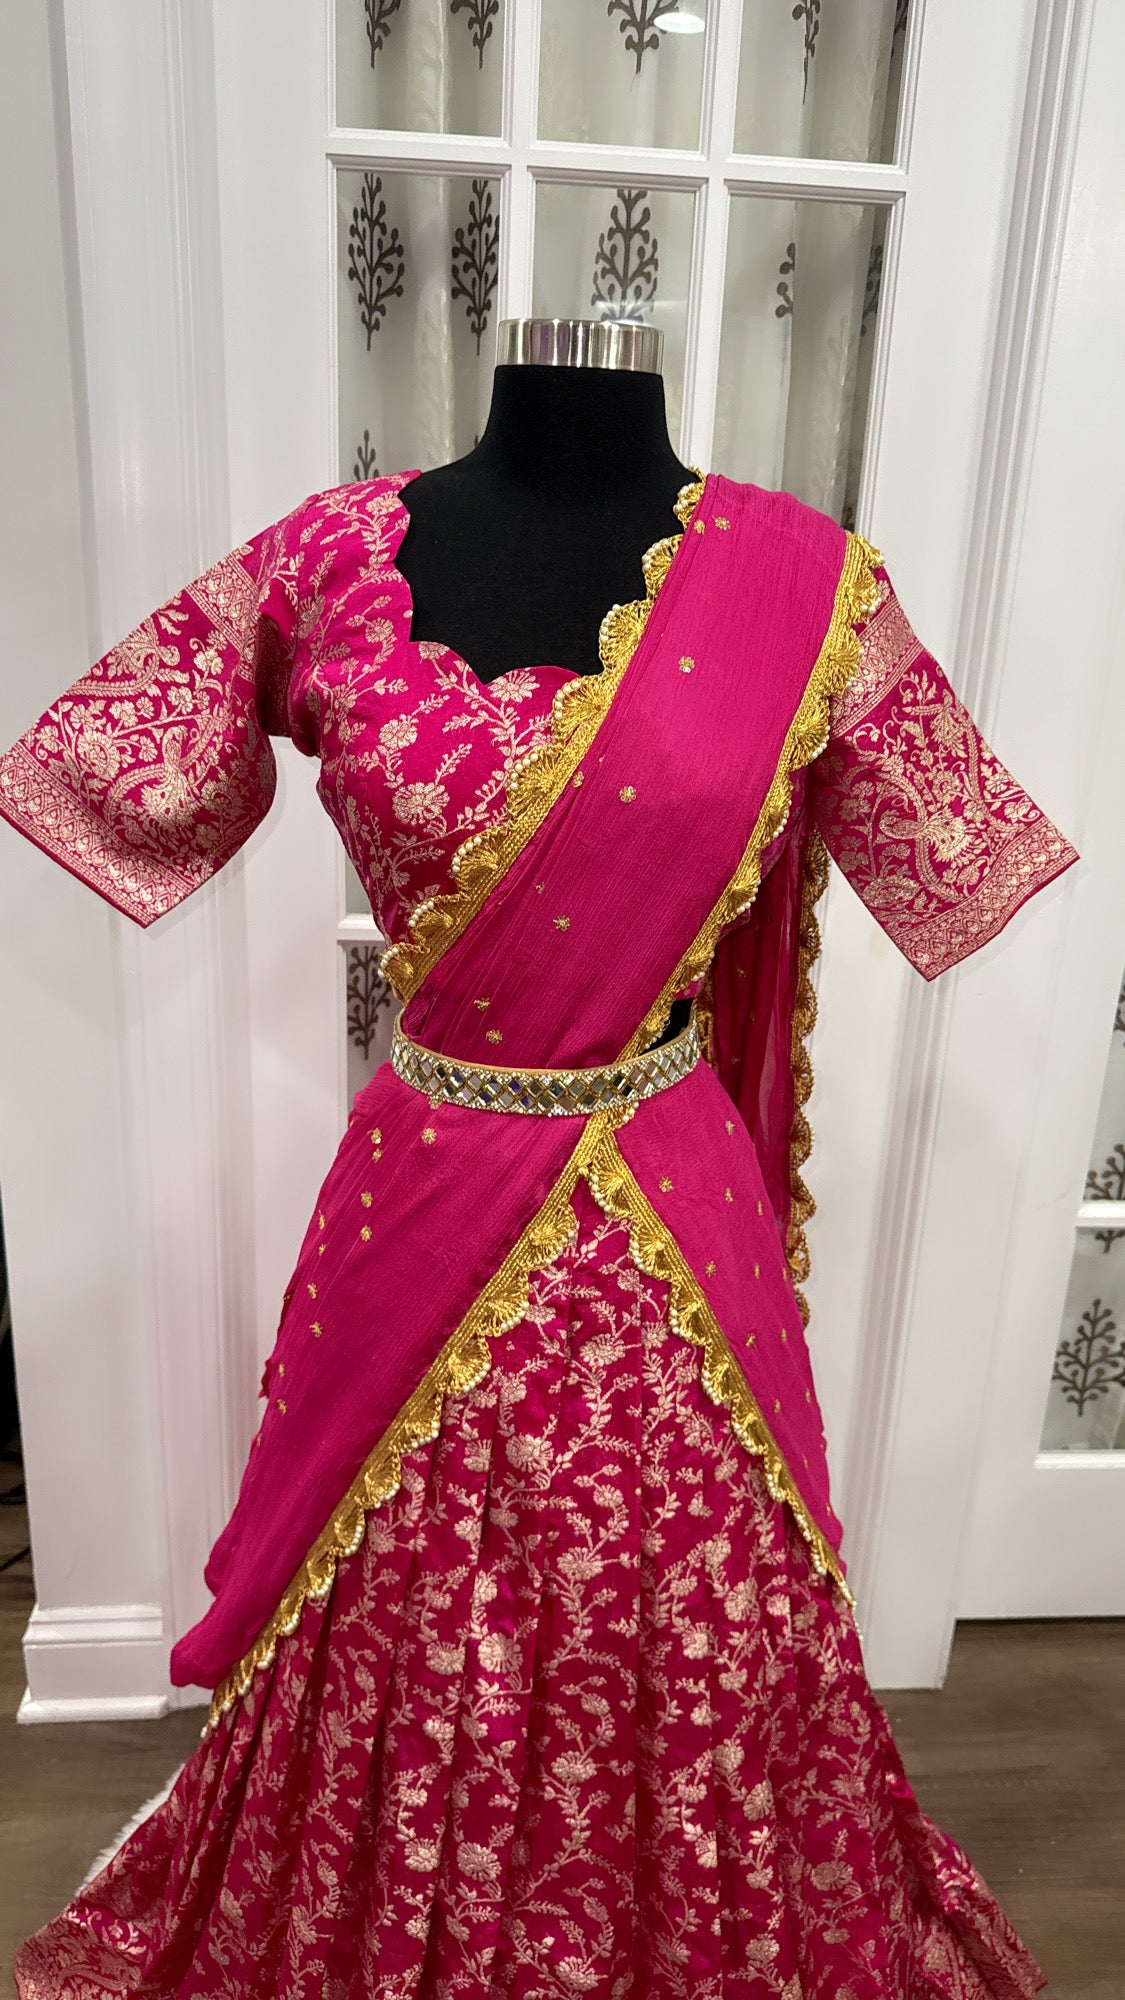 Beautiful Fuchsia pink Banarasi silk Lehenga perfect for festive occasions. Fits size 36 to 40